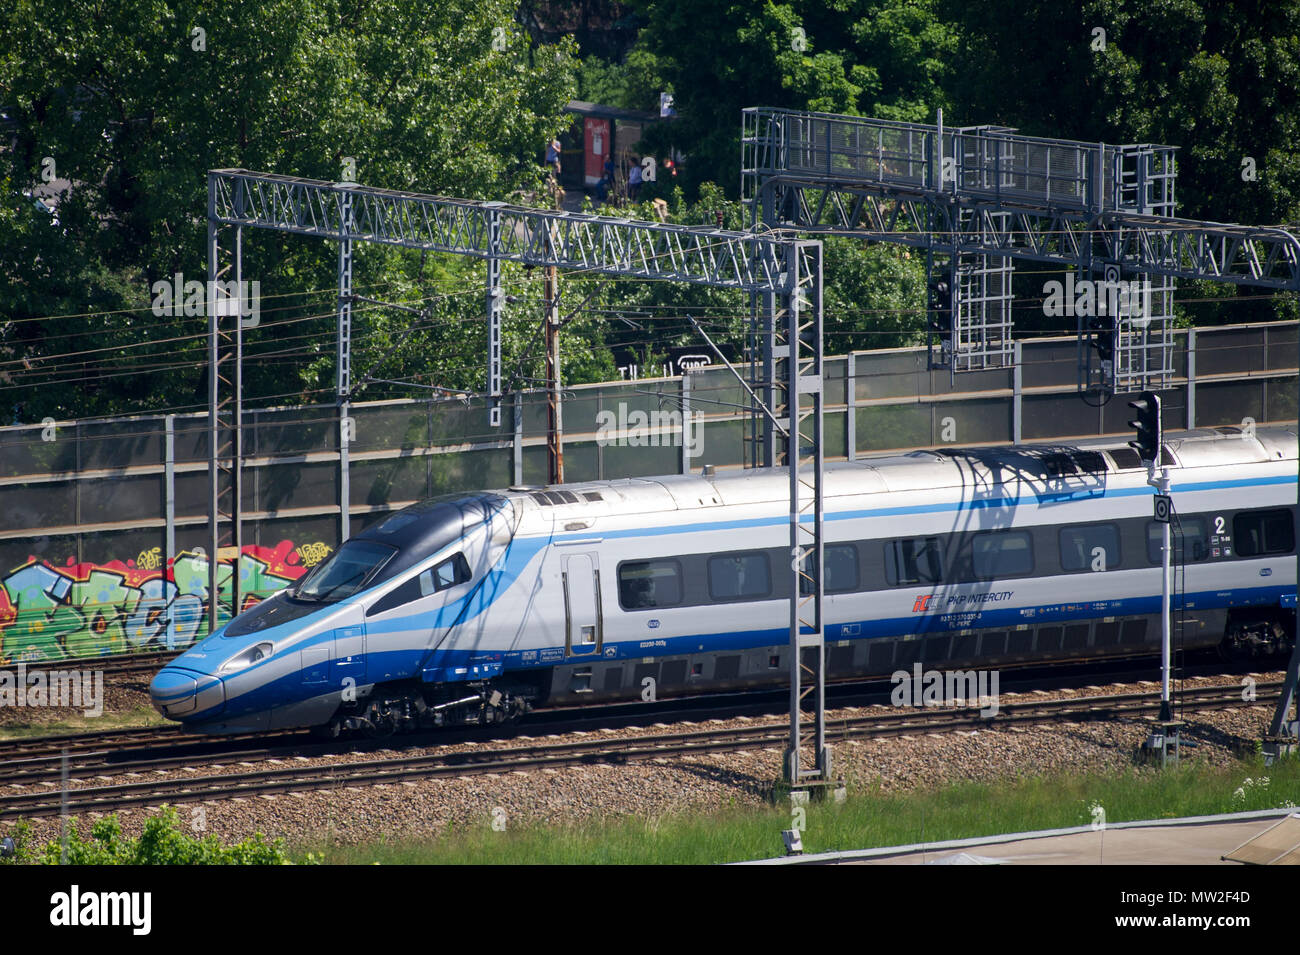 Pendolino high speed train in Gdansk, Poland. May 28th 2018 © Wojciech Strozyk / Alamy Stock Photo Stock Photo